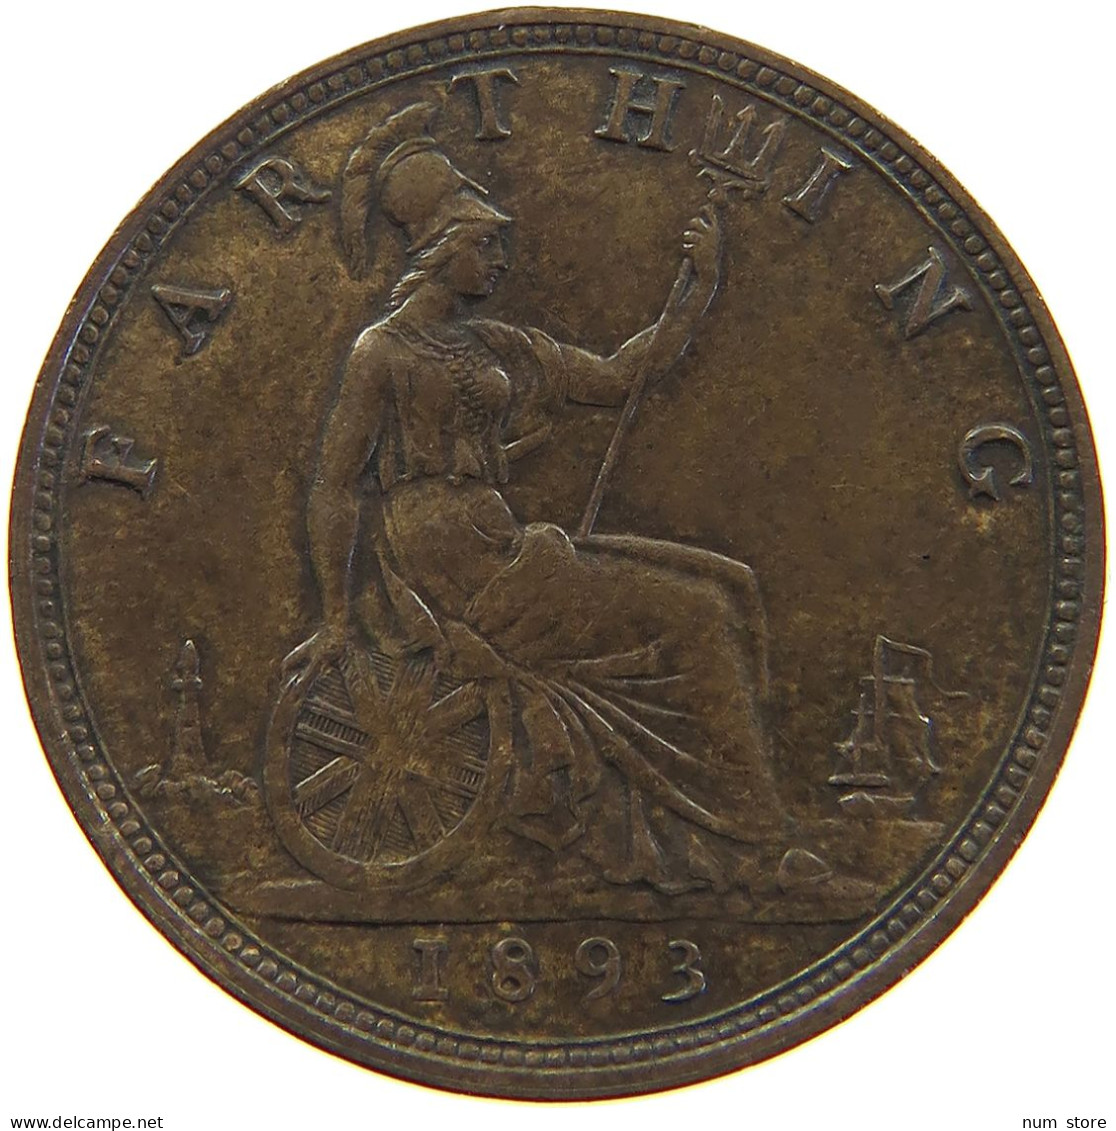 GREAT BRITAIN FARTHING 1893 Victoria 1837-1901 #s010 0119 - B. 1 Farthing